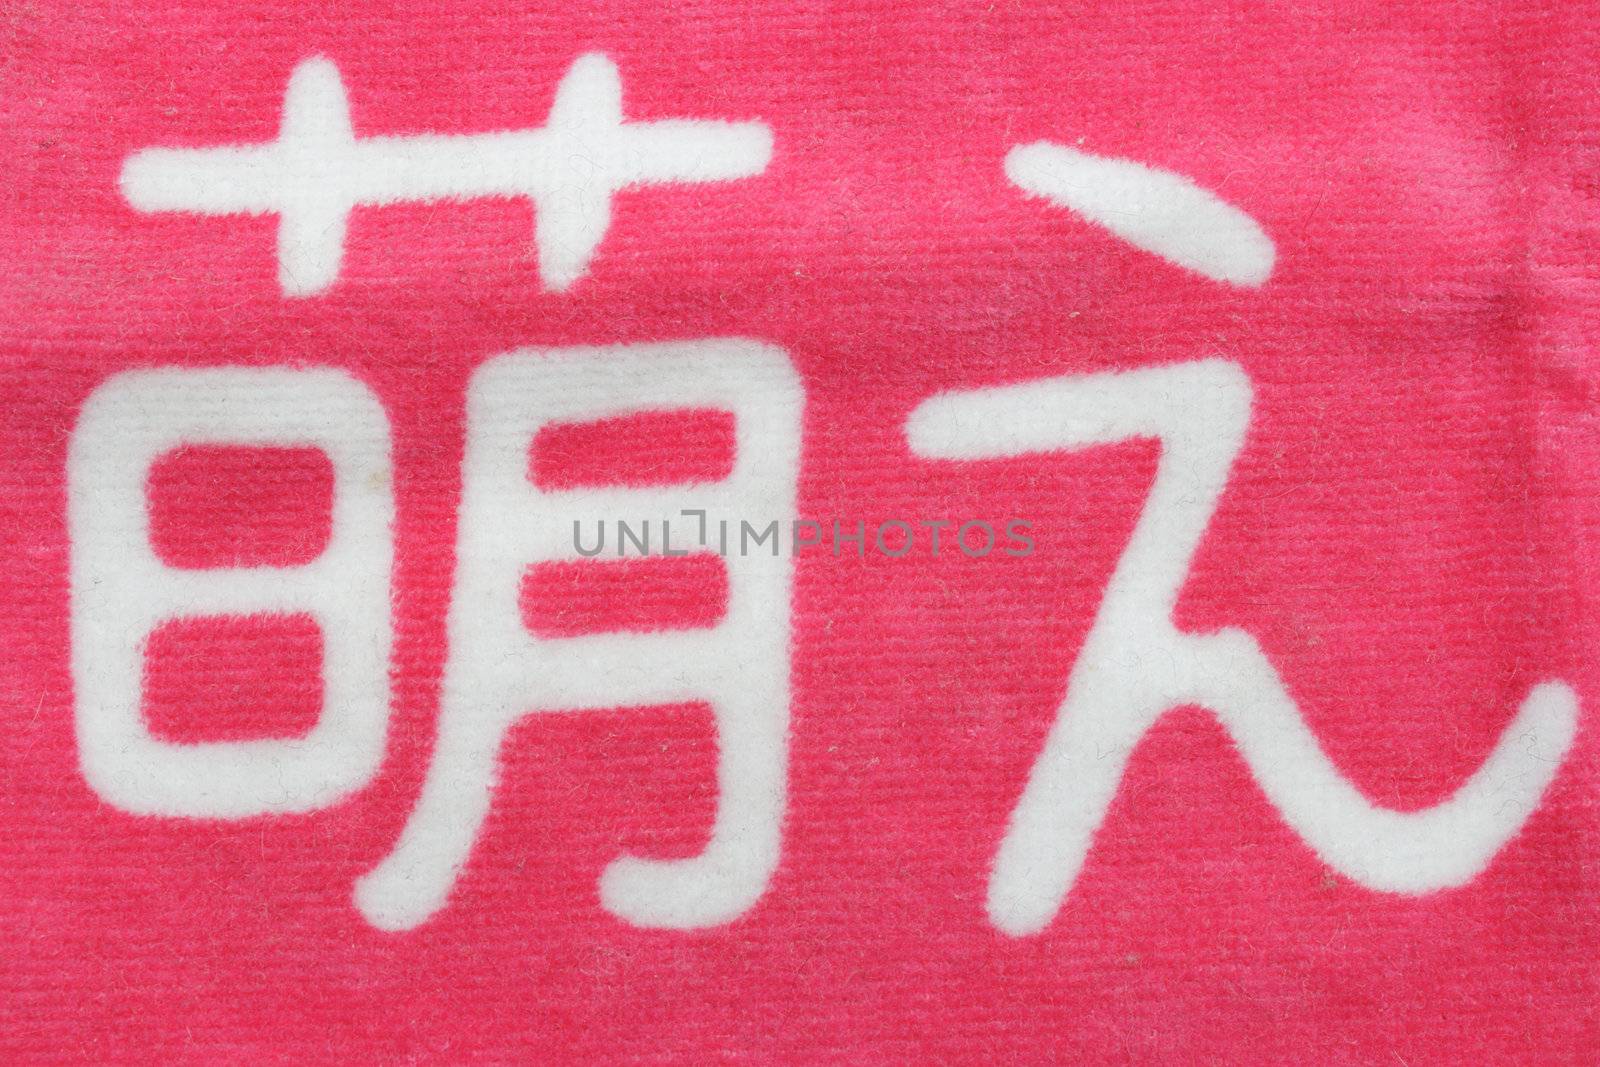 Kanji moeru on the pink cloth by pulen